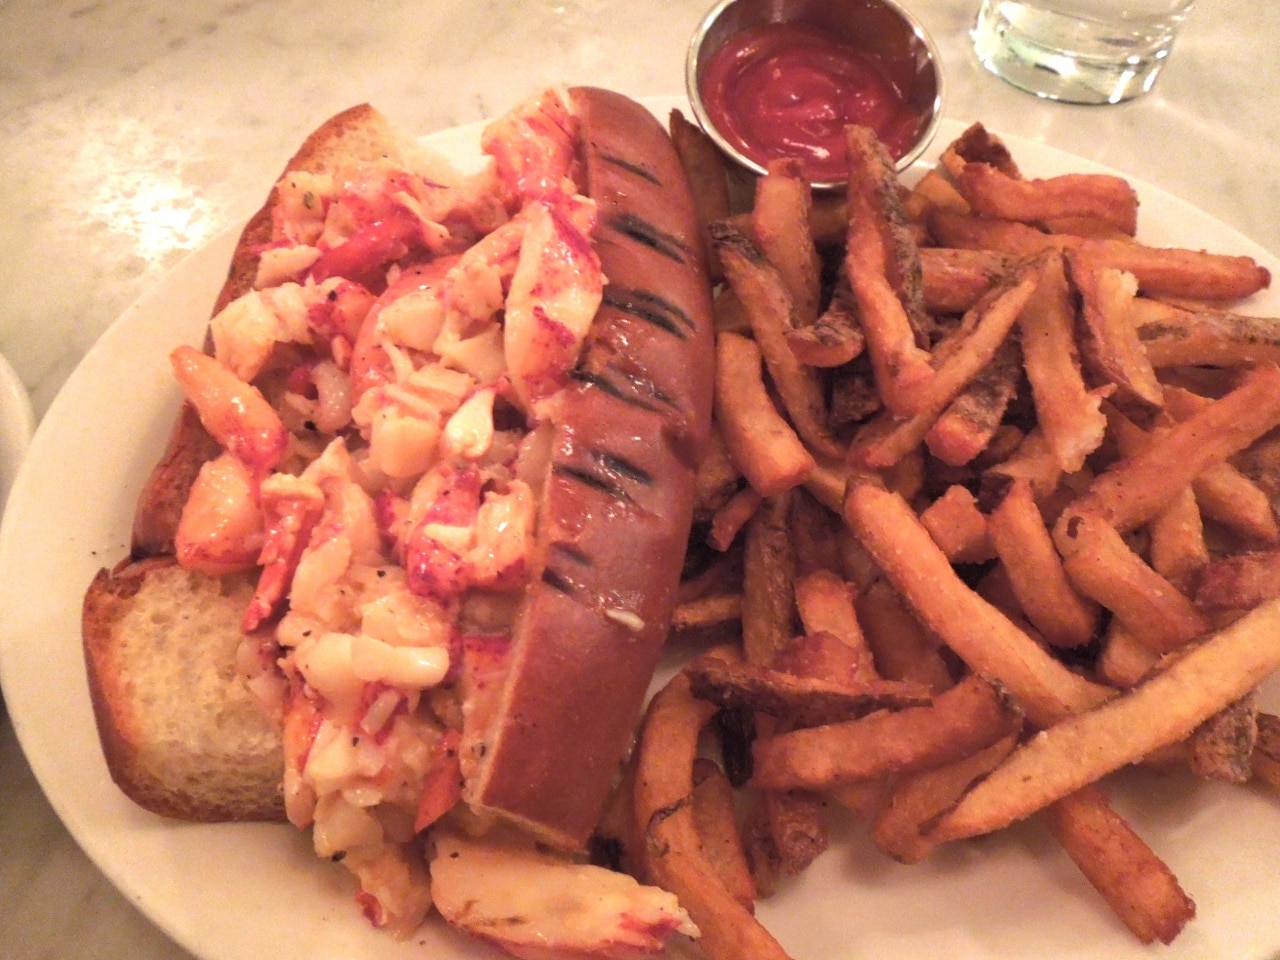 Neptune Oyster Bar’s warm, buttered lobster roll is often named the best lobster roll in Boston.